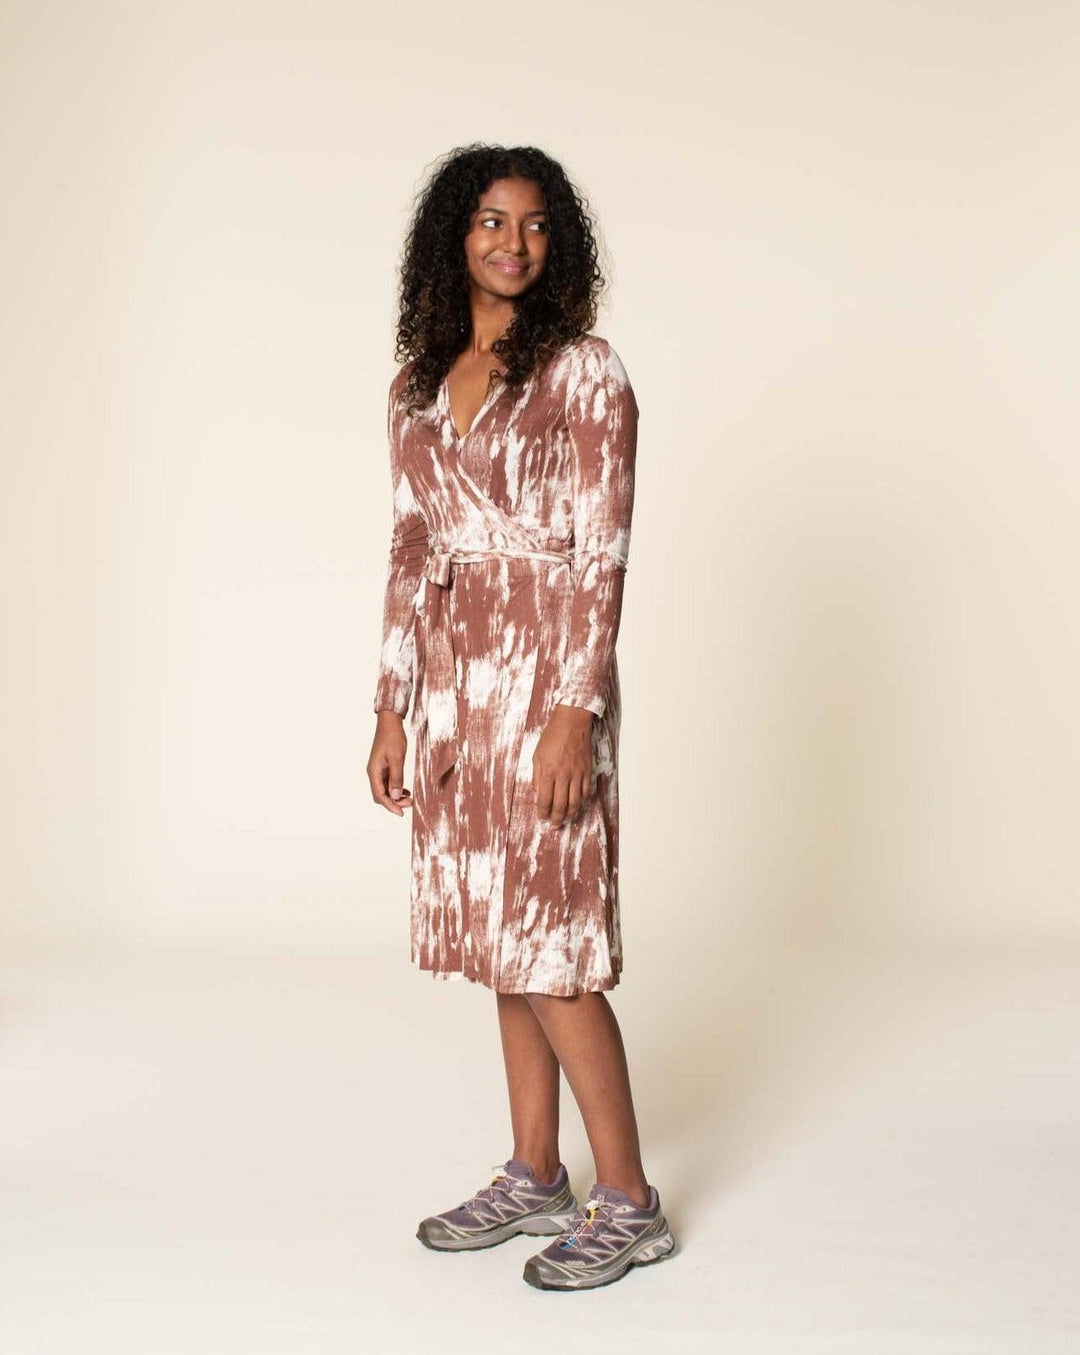 Diana Wrap Dress Sewing pattern - Wardrobe By Me